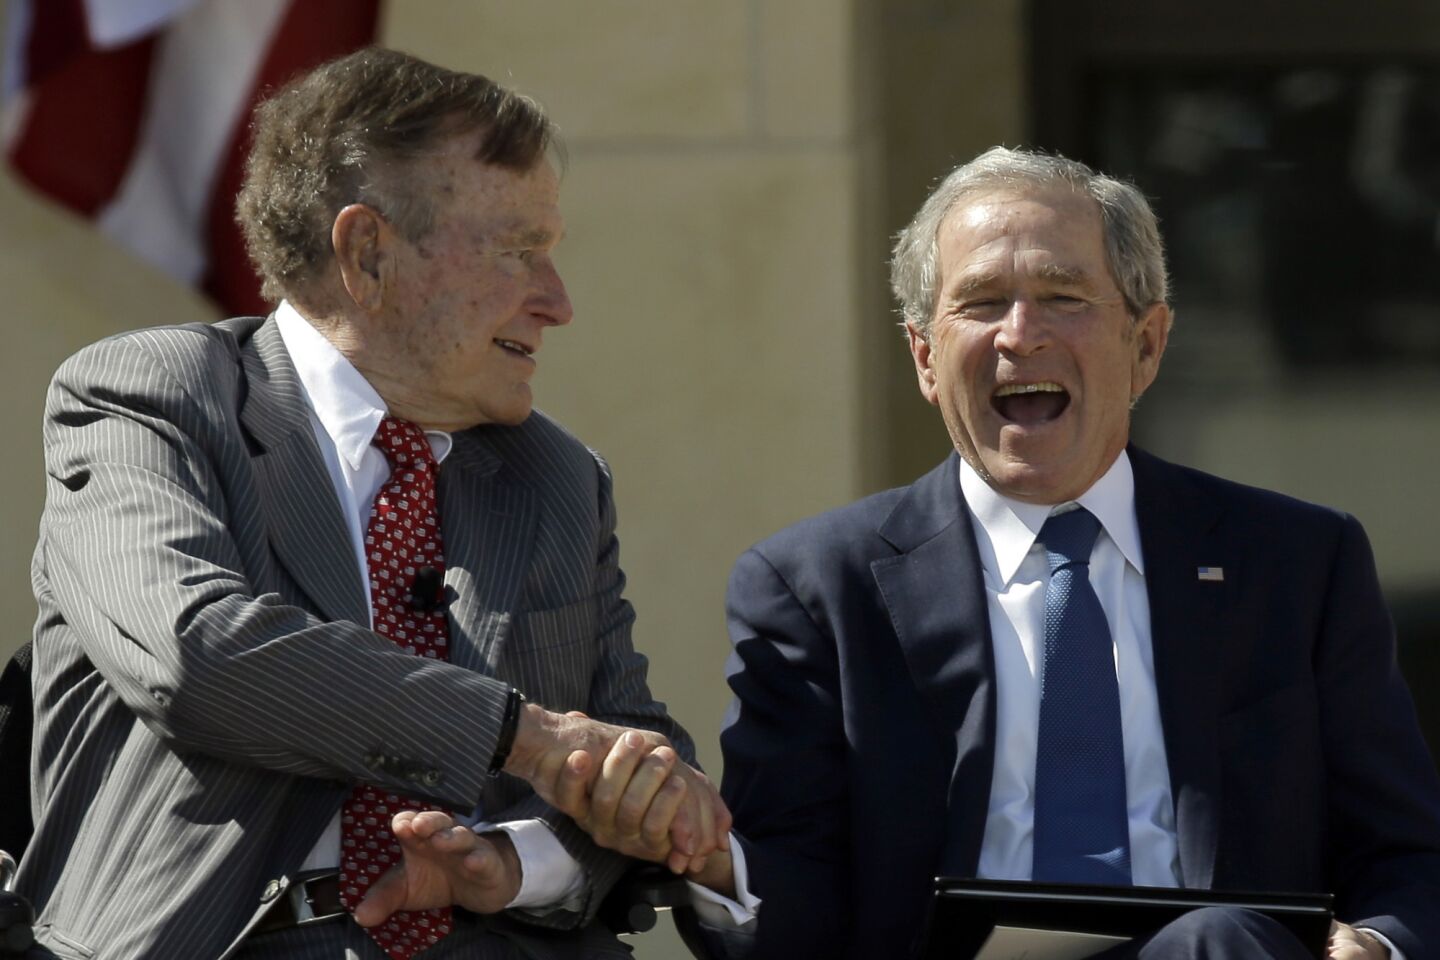 A Bush handshake